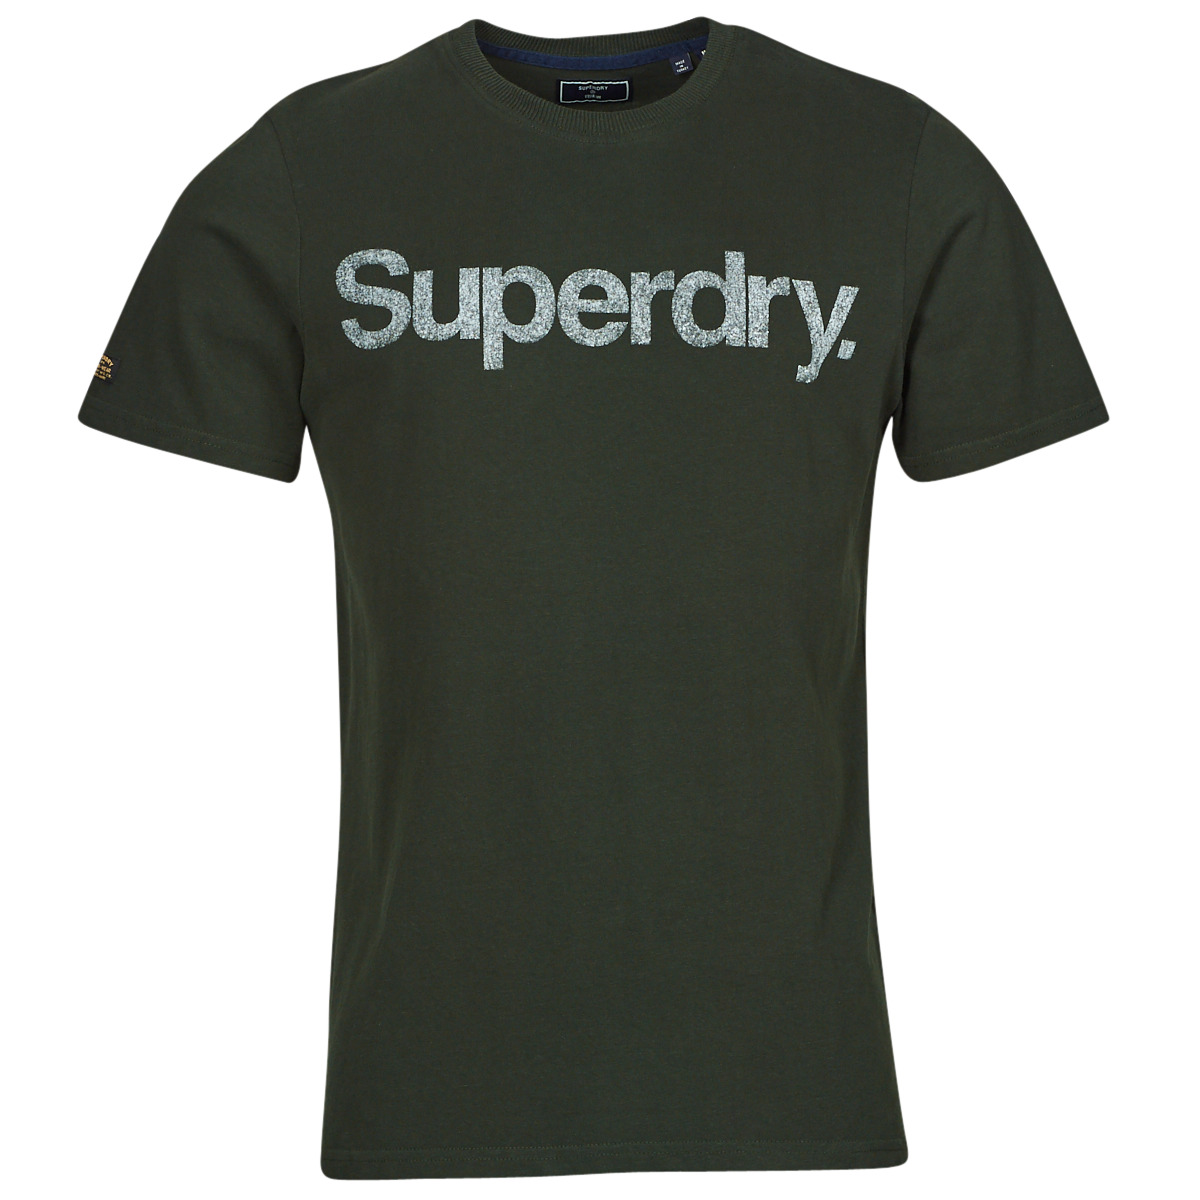 Superdry Surplus Goods Olive VINTAGE CL CLASSIC TEE tjlLc7N2